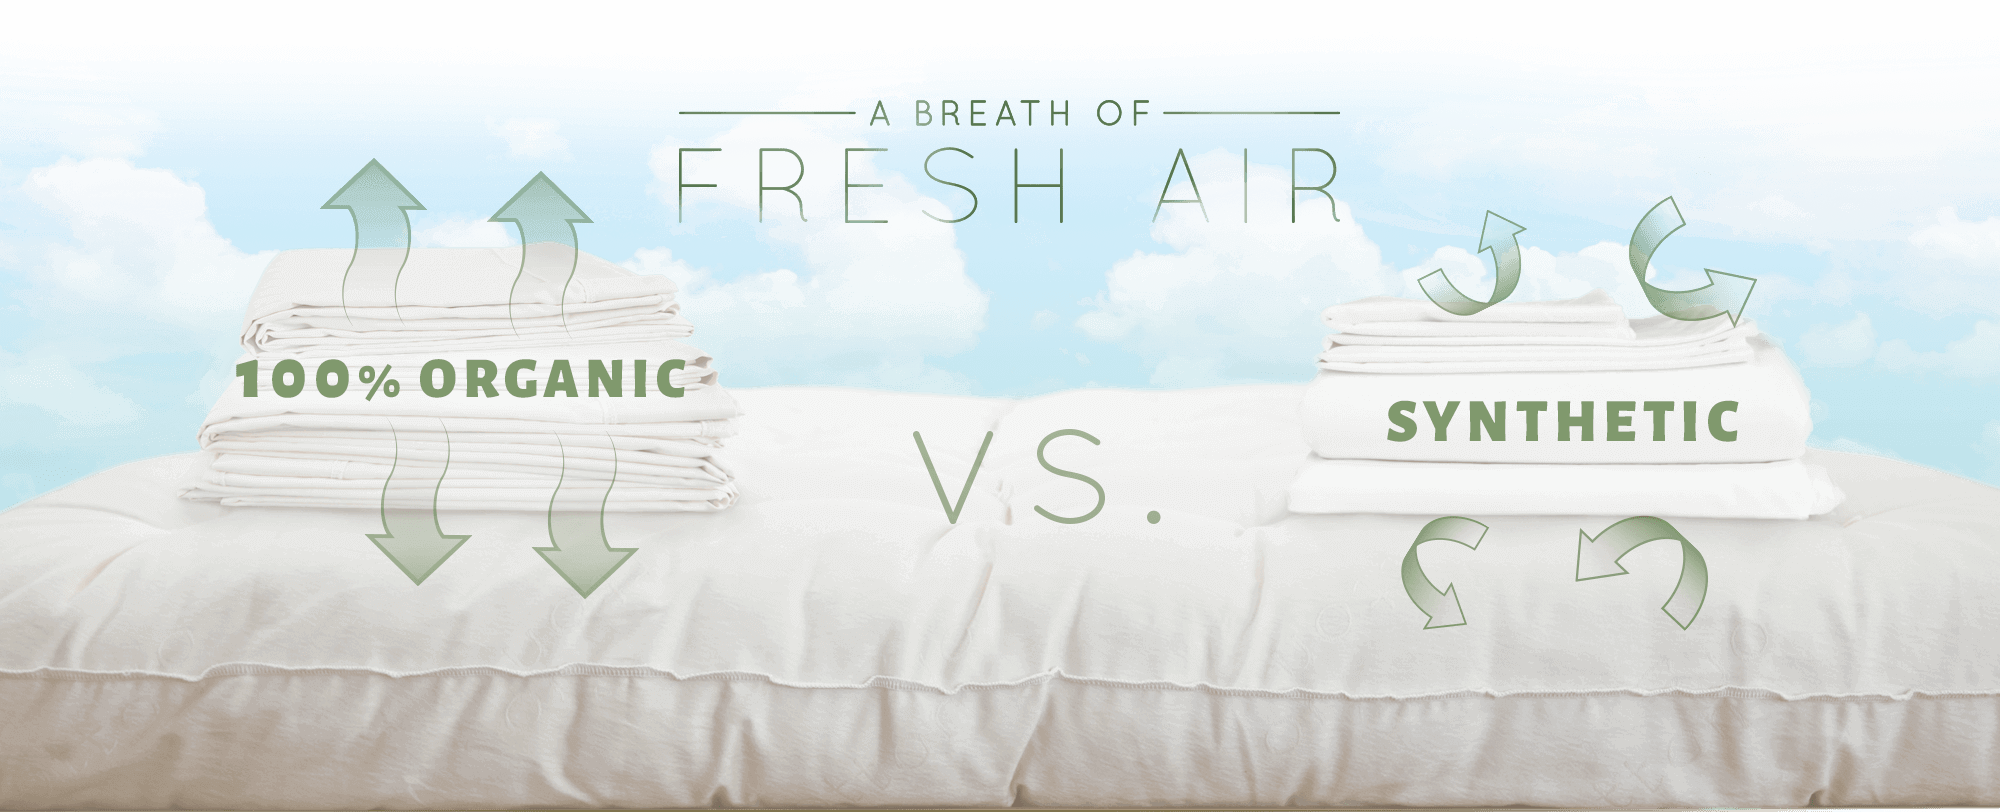 A breath of fresh air - 100% Organic VS Synthetic